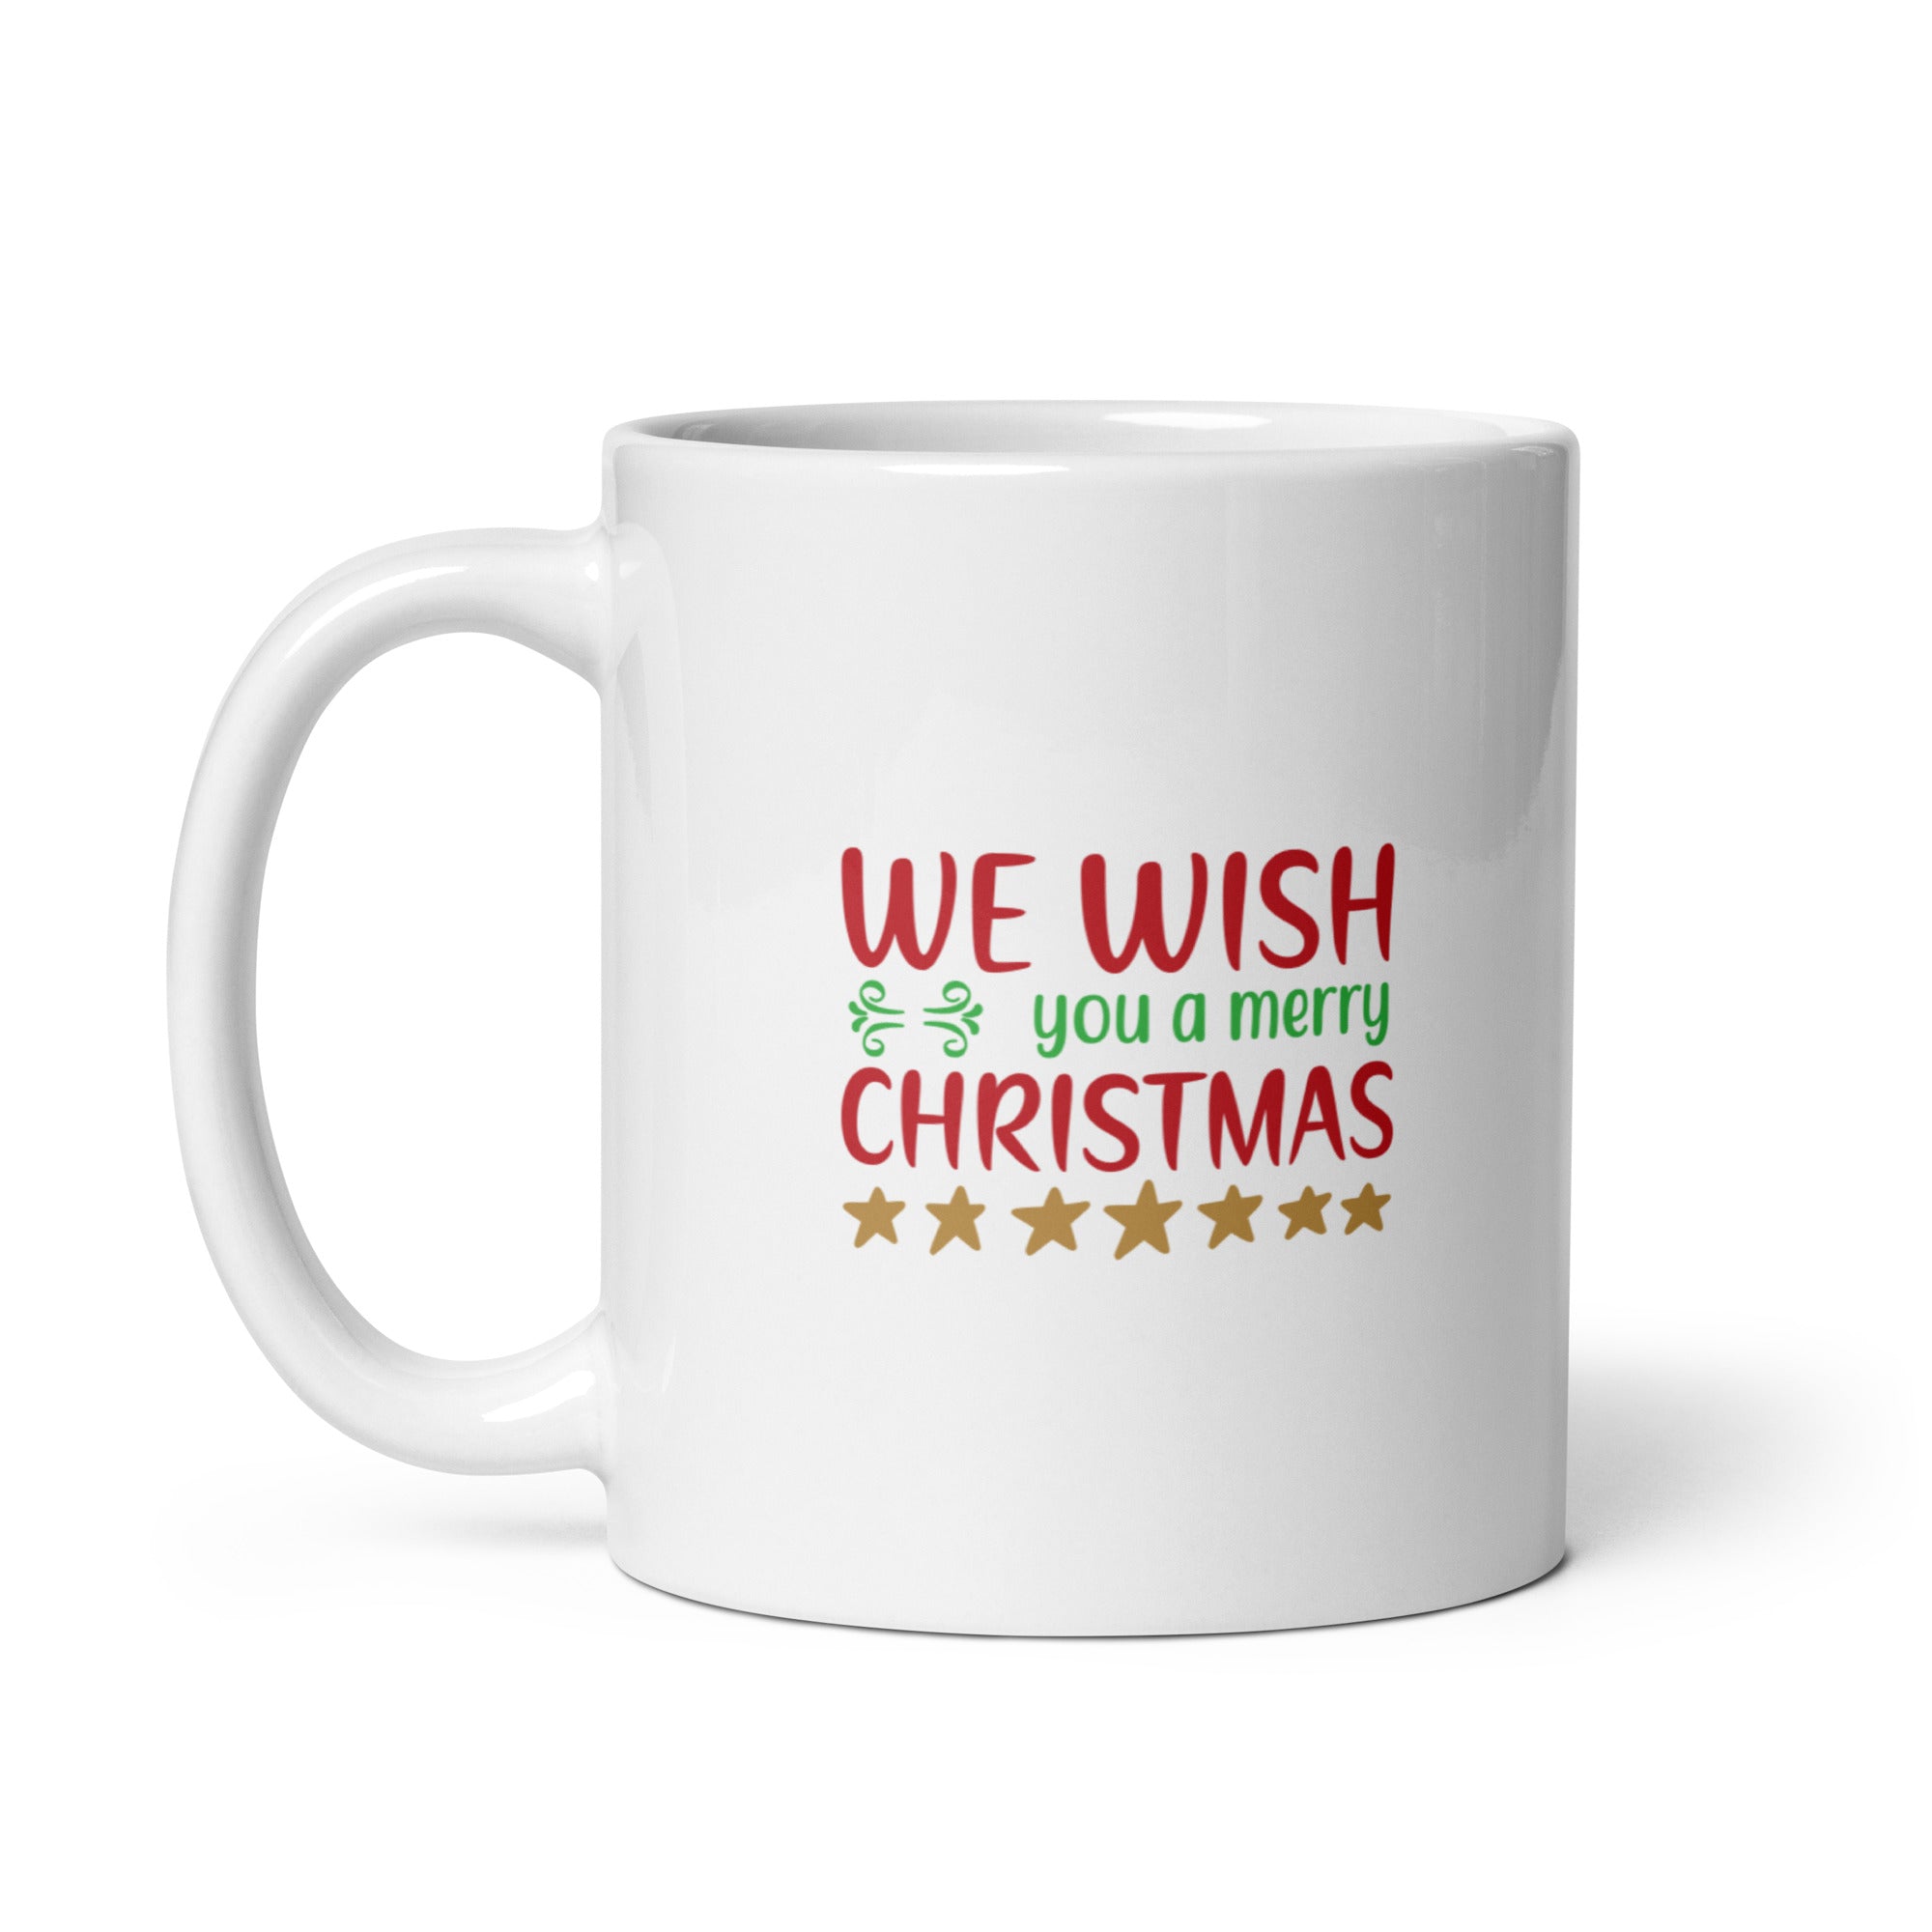 We Wish You A Merry Christmas - White glossy mug